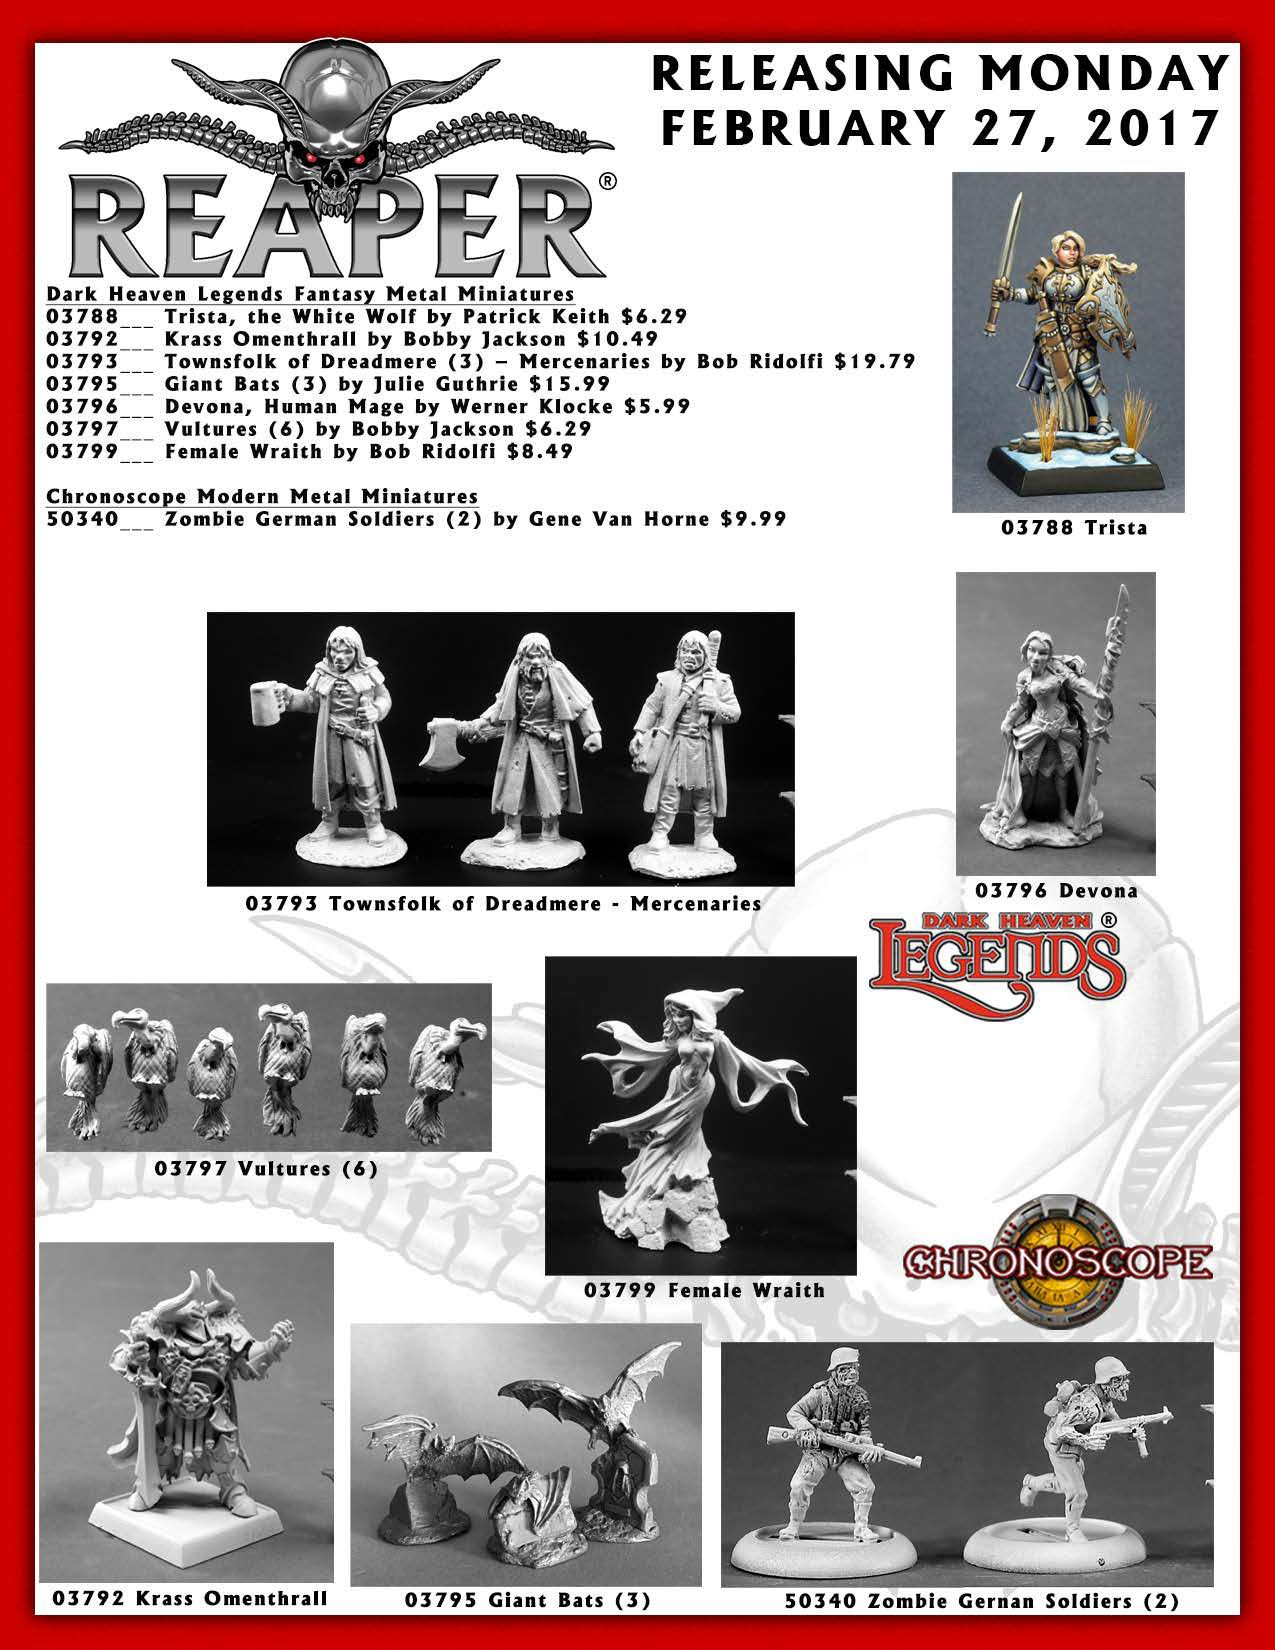 Reaper Dark Heaven Legends 03793  Townsfolk of Dreadmere Mercenaries 3 